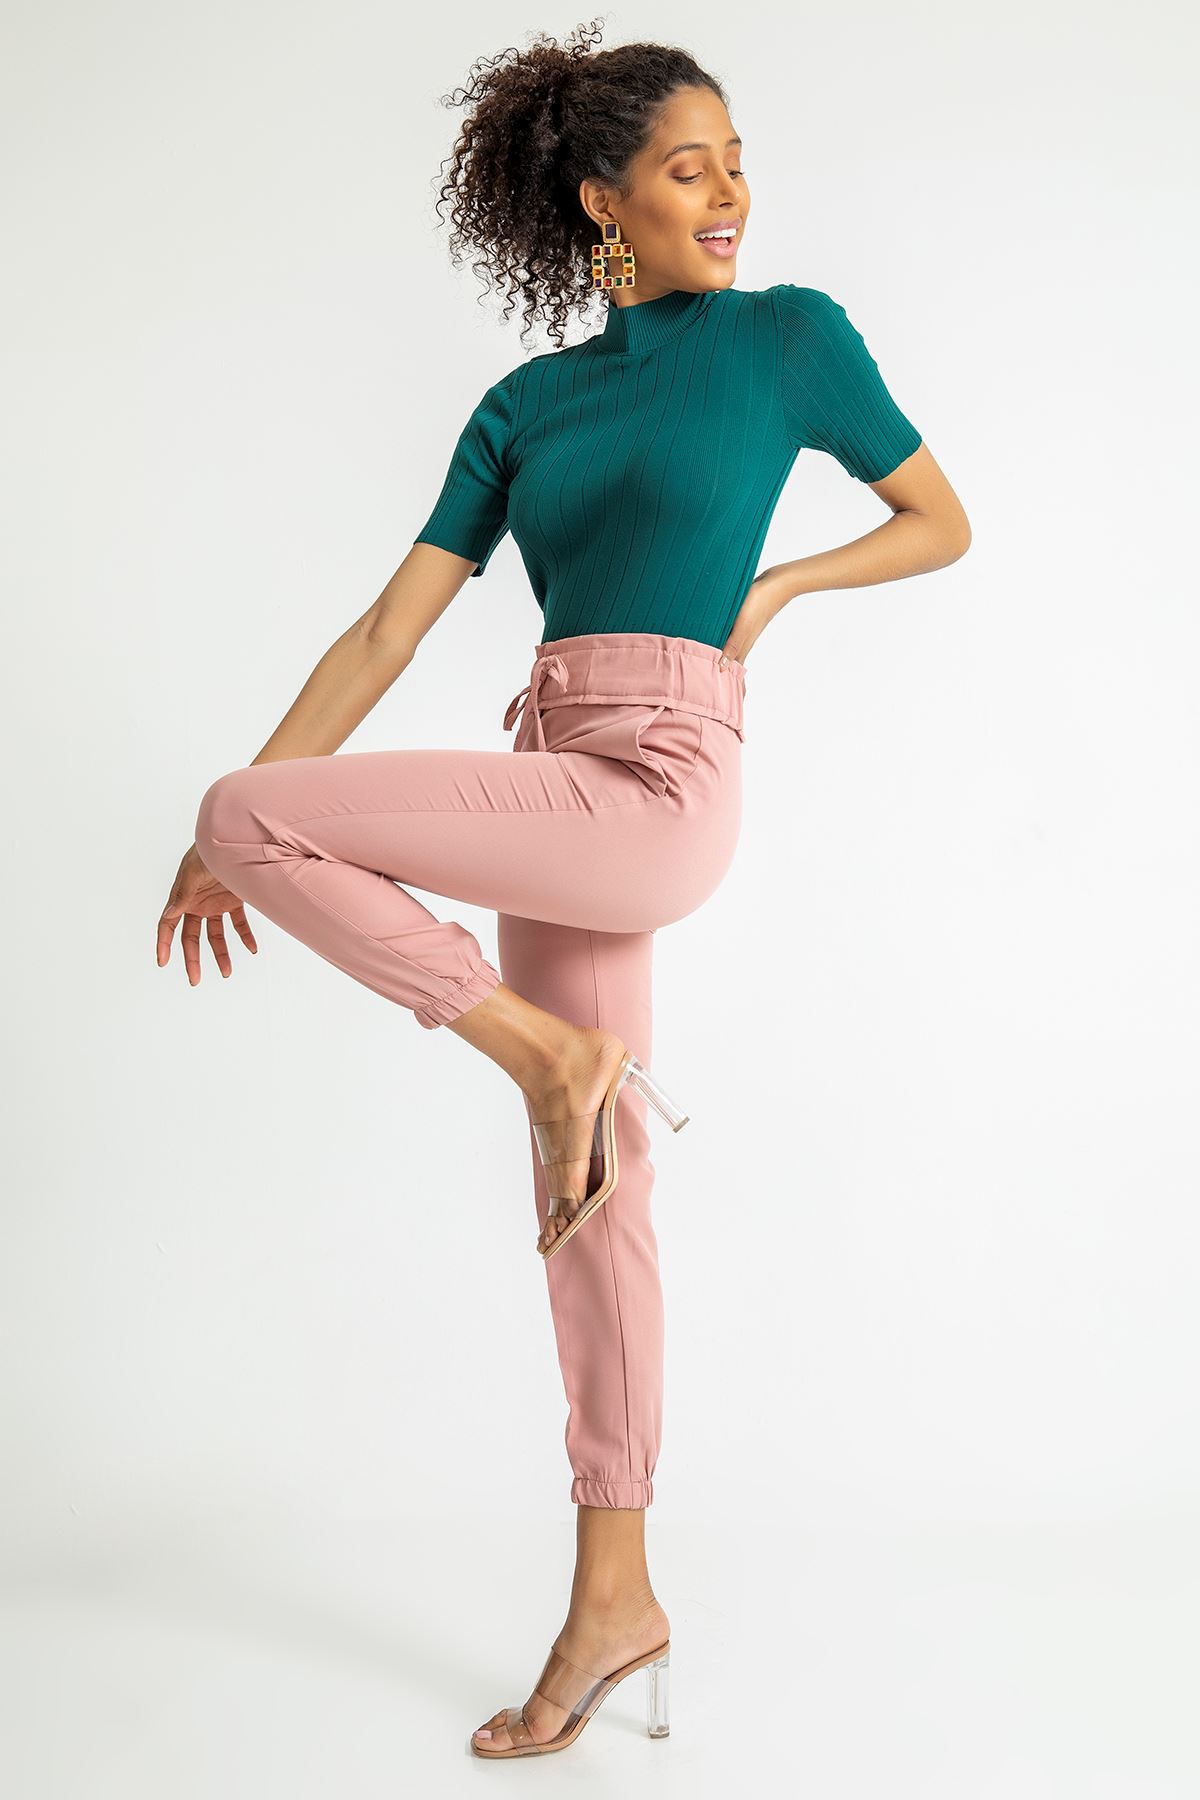 Atlas Fabric Ankle Length Elastic Waist Jogger Women'S Trouser - Light Pink